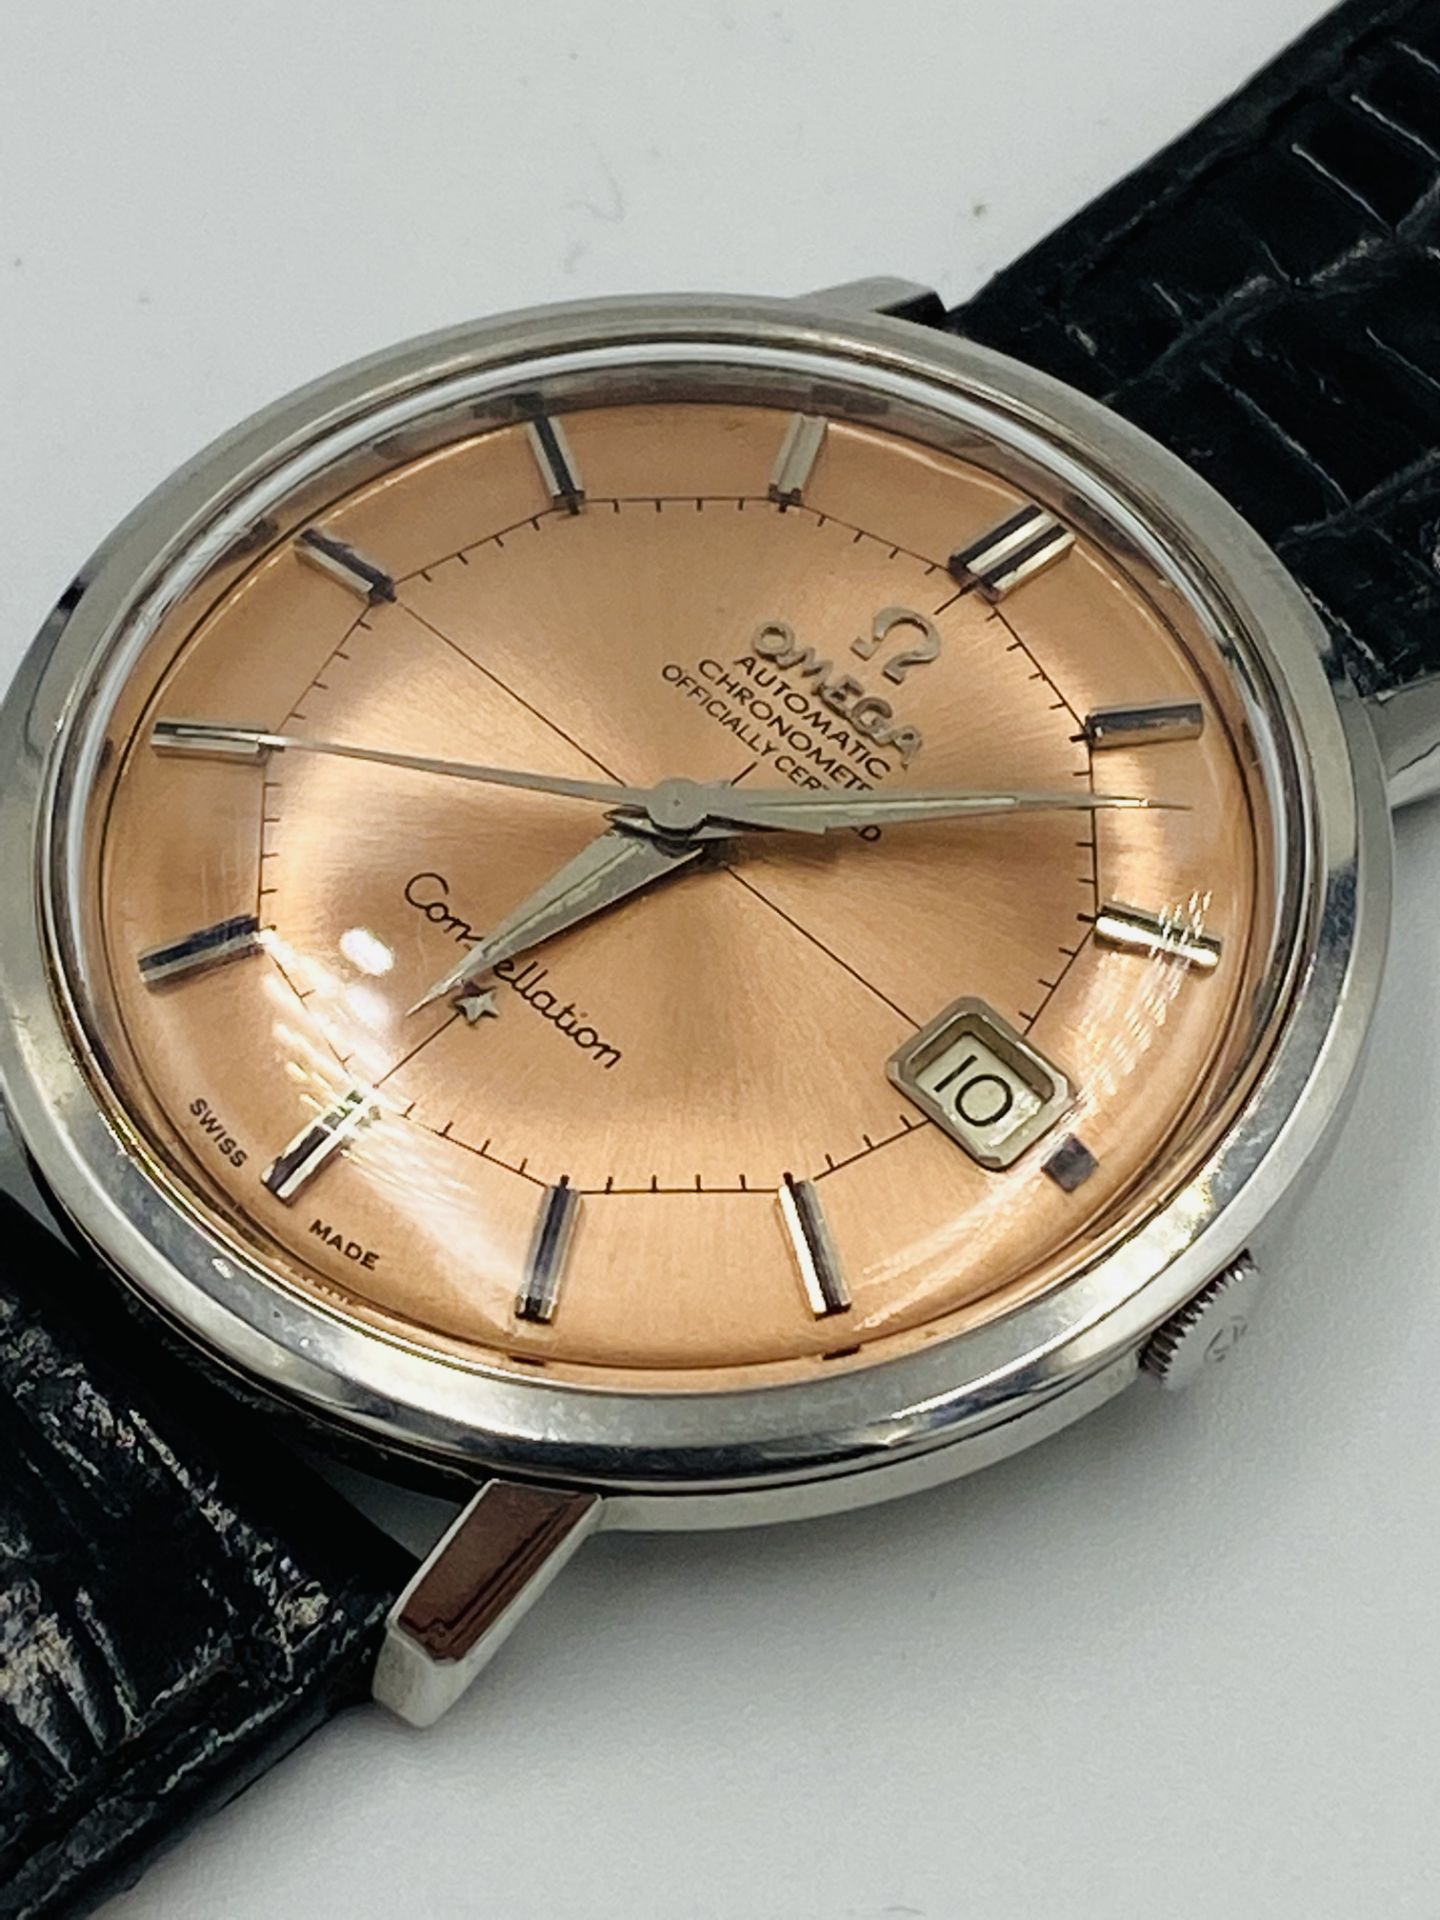 Omega Automatic Chronometer Constellation wrist watch - Image 3 of 10